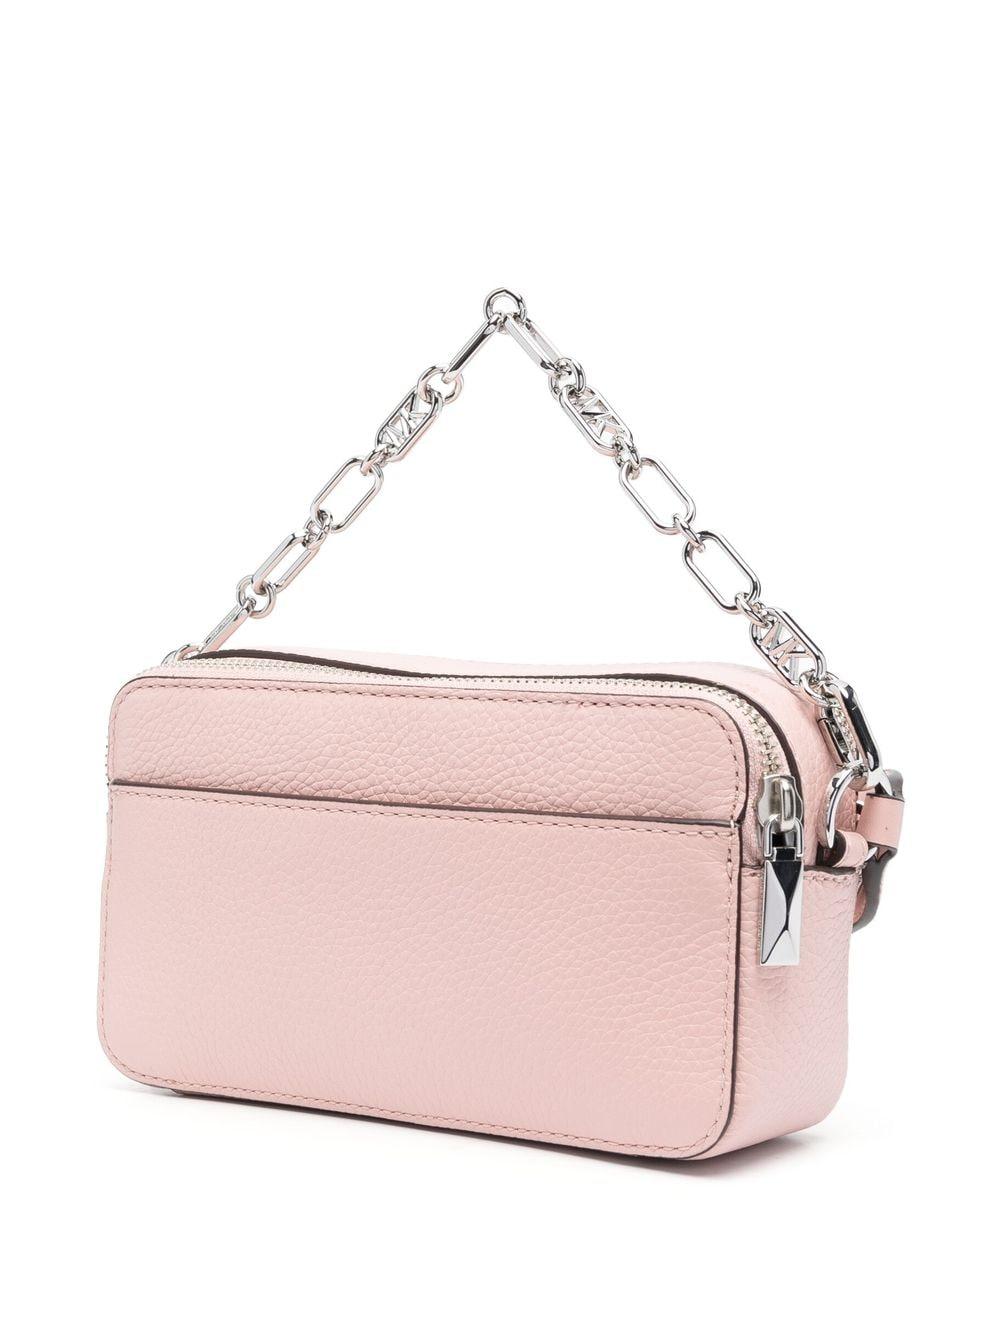 Michael Kors Medium Camera Bag Soft Pink, Camera Bag